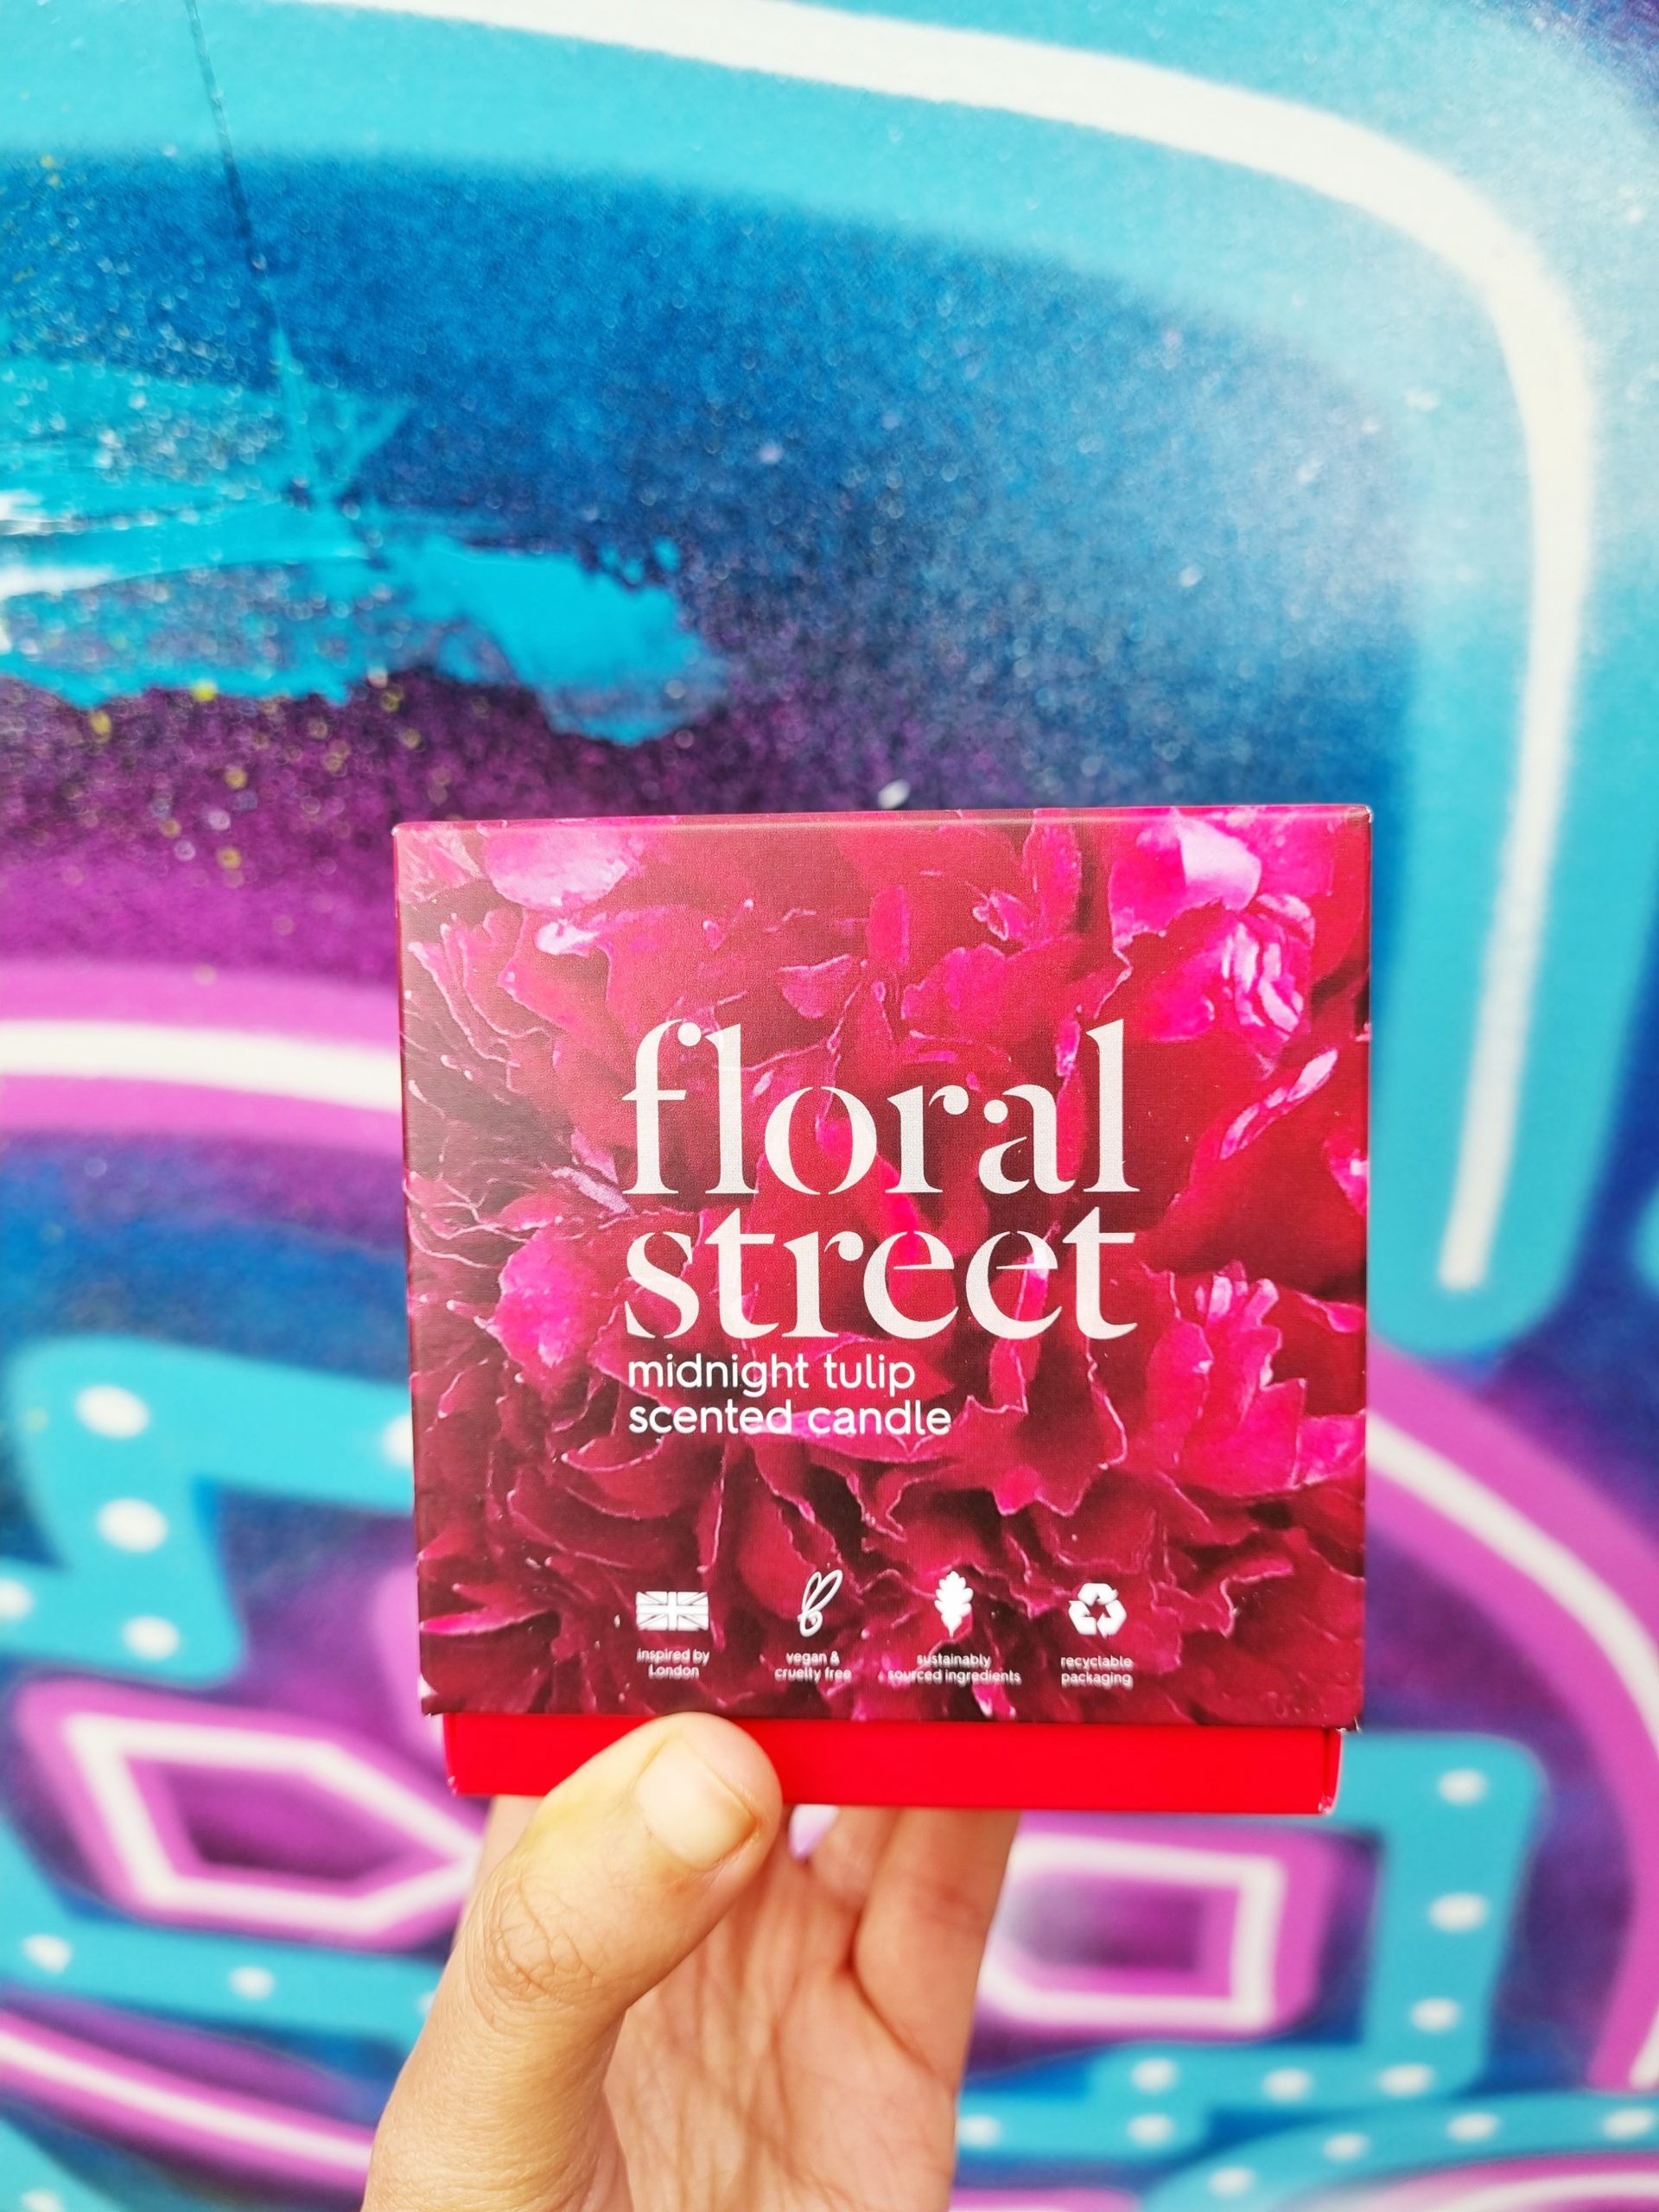 <img src="floral.jpg" alt="floral street midnight tulip candle"/> 